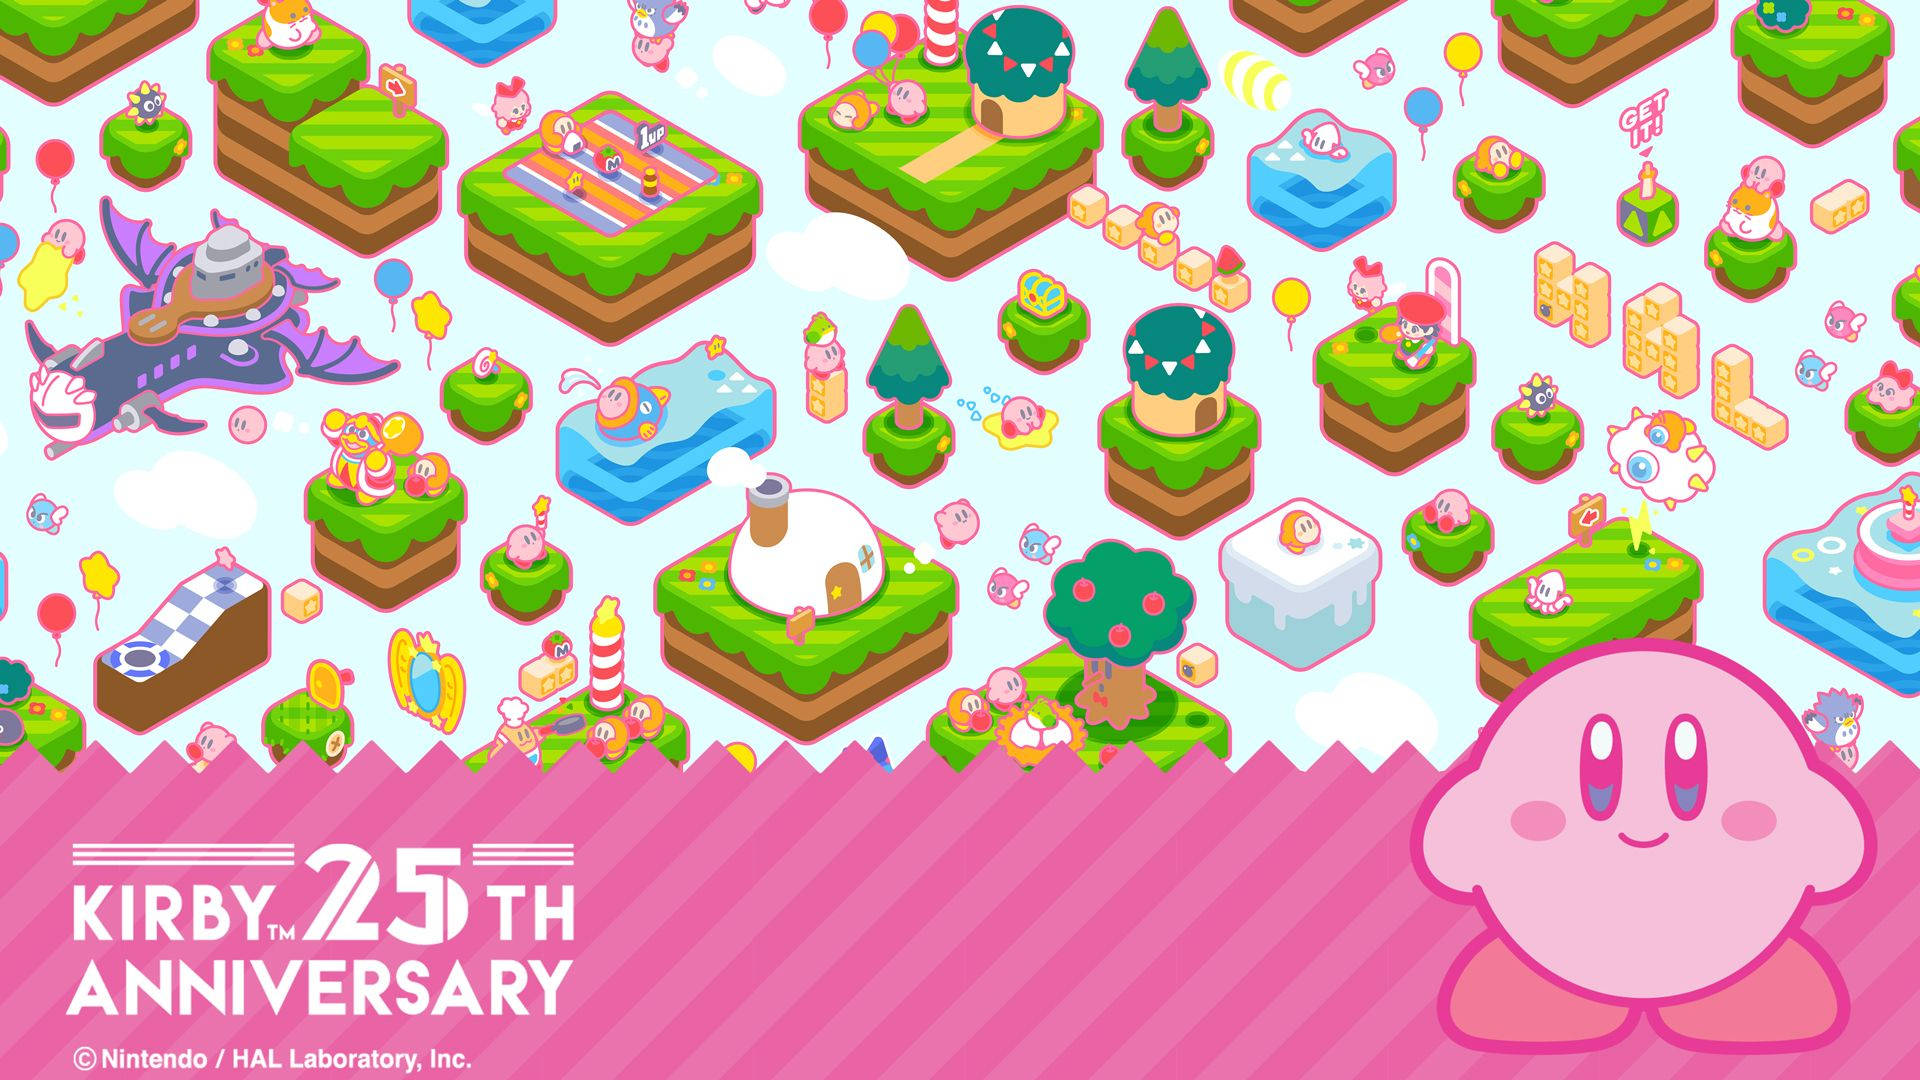 Beautiful HD wallpaper of the popular Nintendo video game, Kirby.